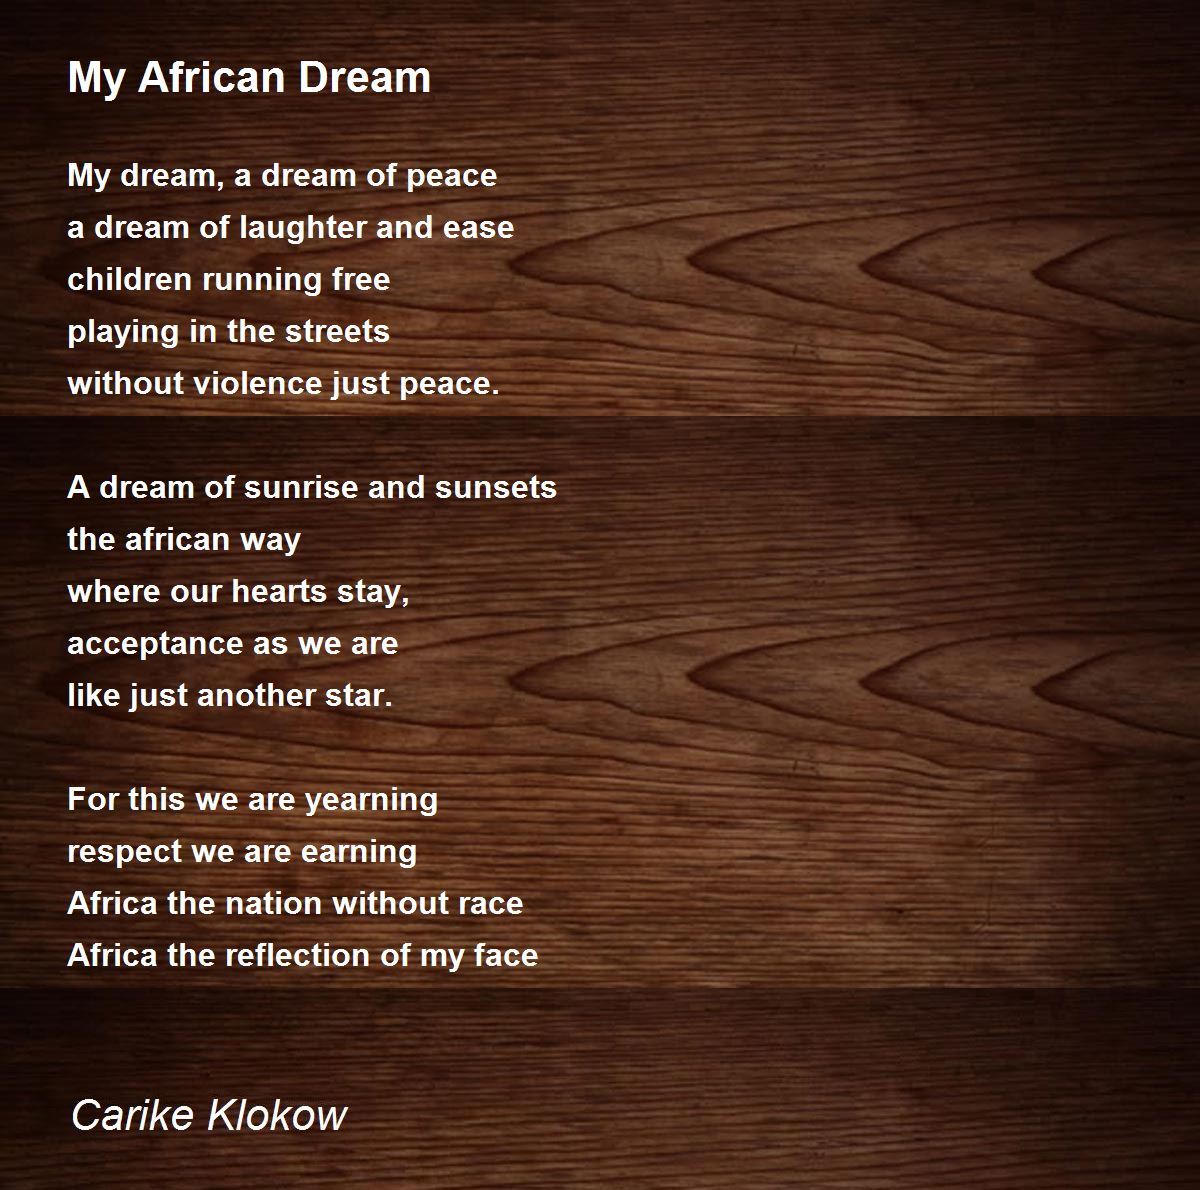 My African Dream - My African Dream Poem by Carike Klokow